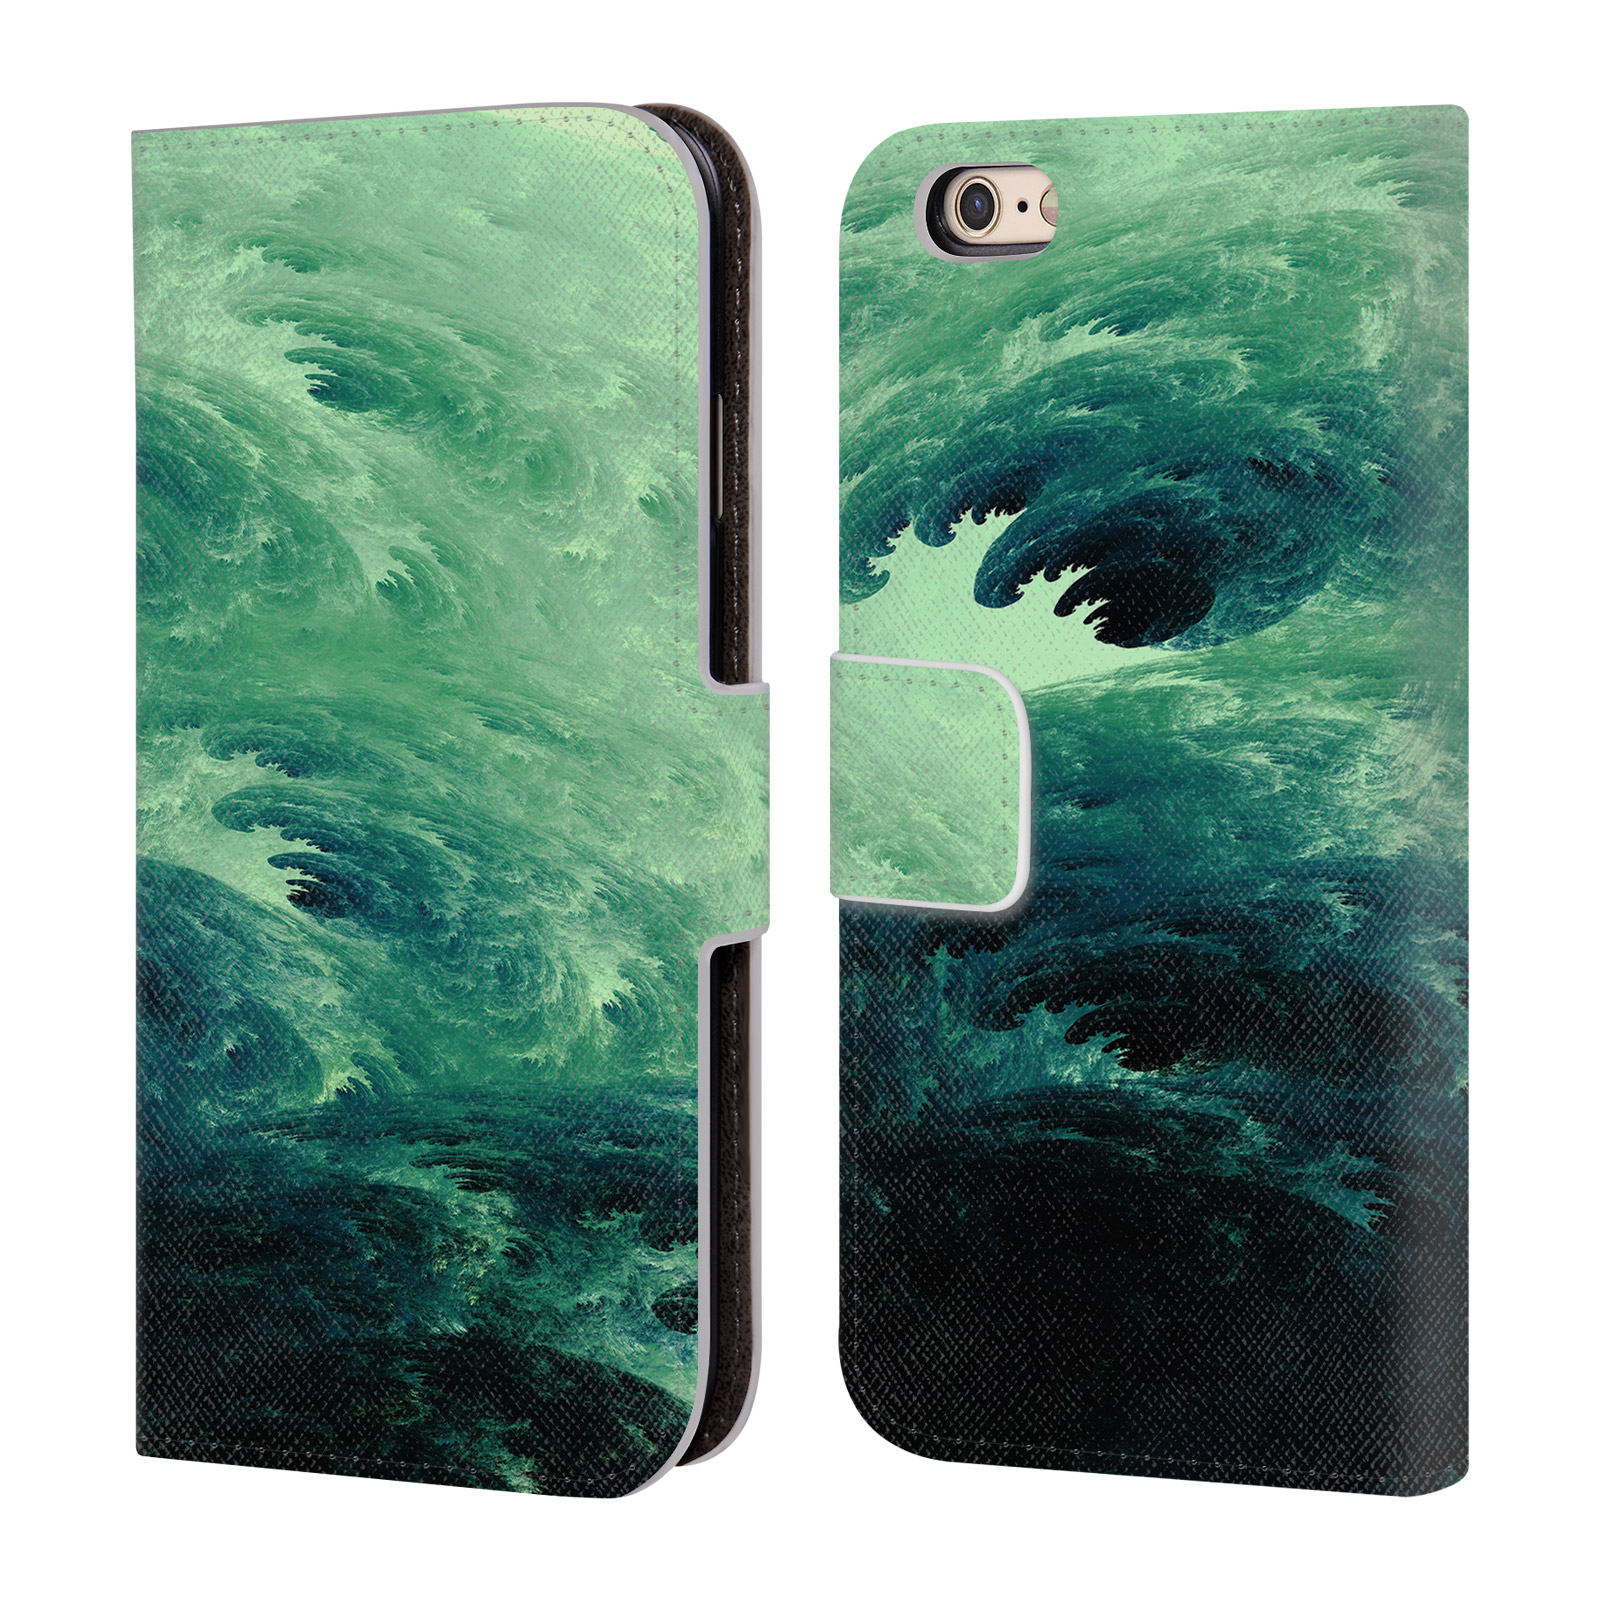 Pouzdro HEAD CASE pro mobil Apple Iphone 6 / 6S - Andi Greyscale umělec divoký oceán